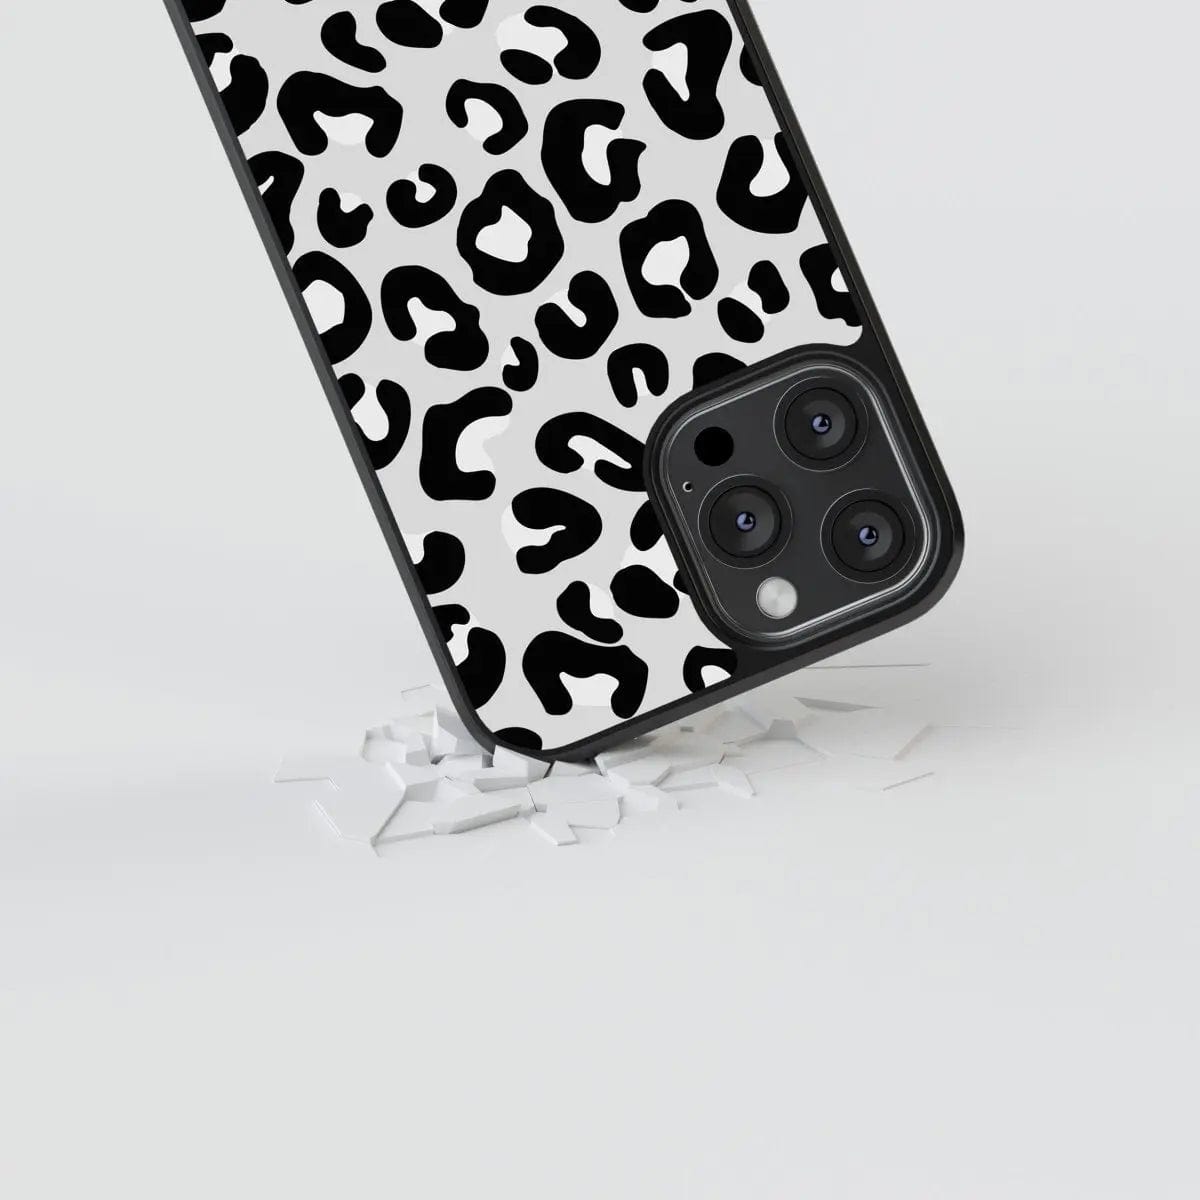 Phone case "Leopard pattern" - Artcase